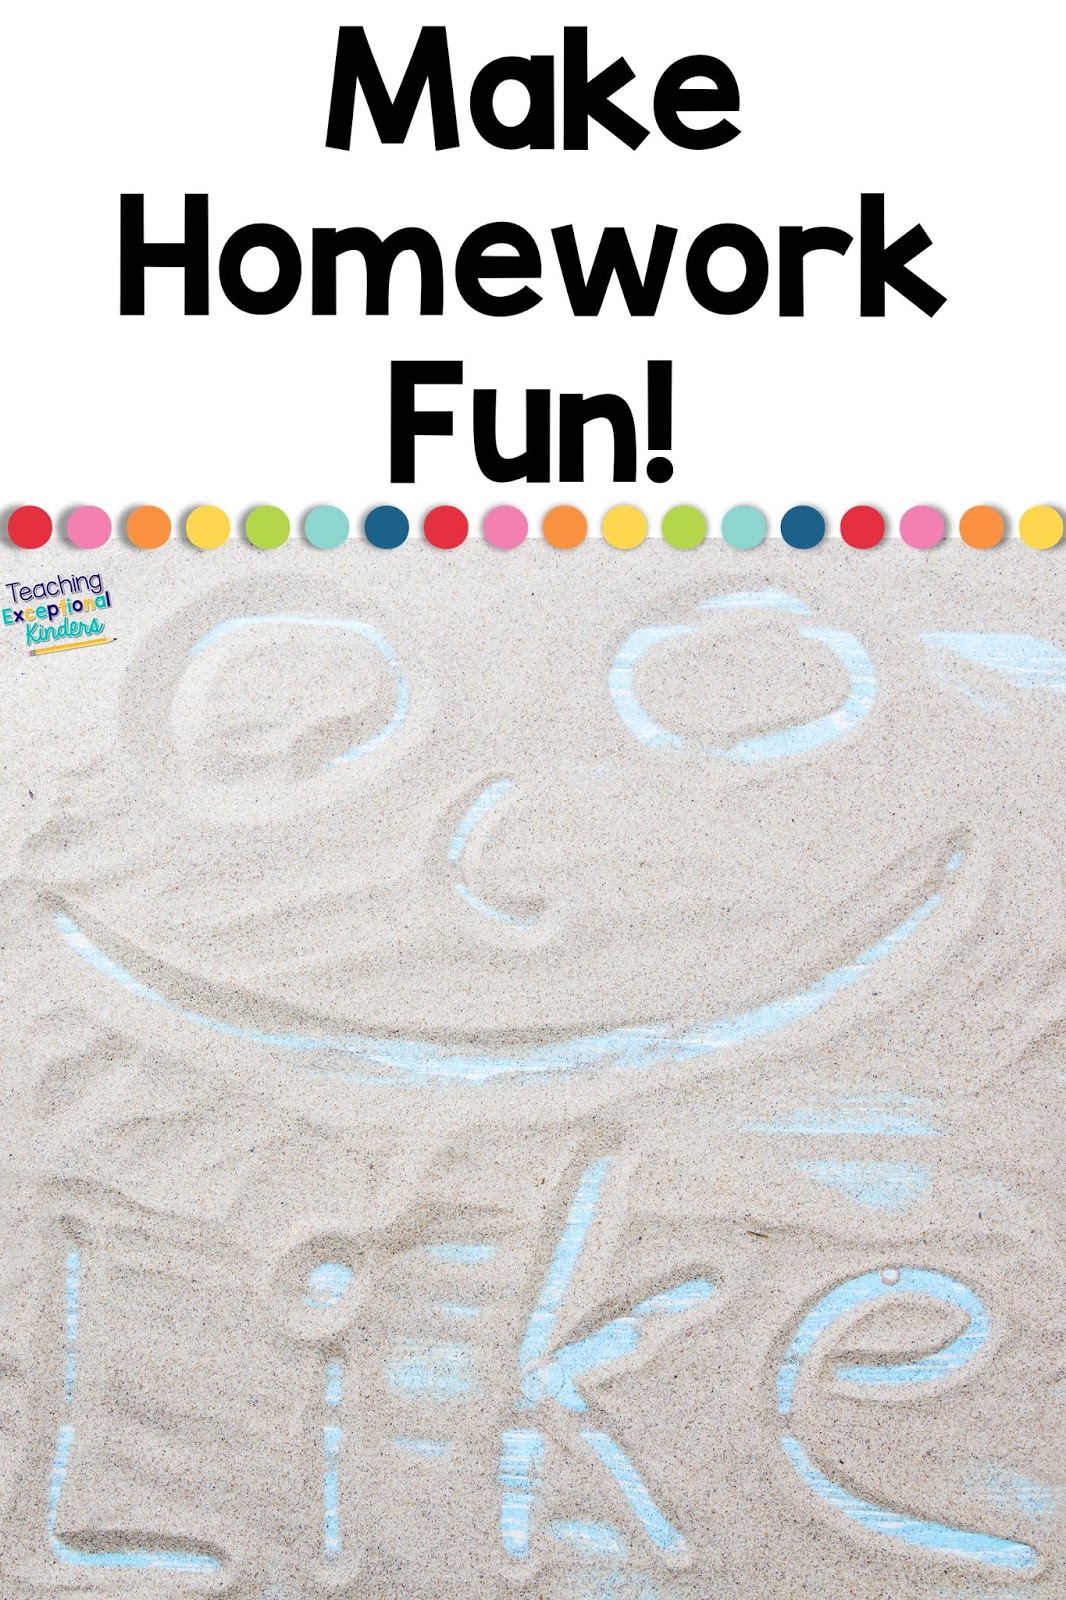 how to make homework fun for kindergarten